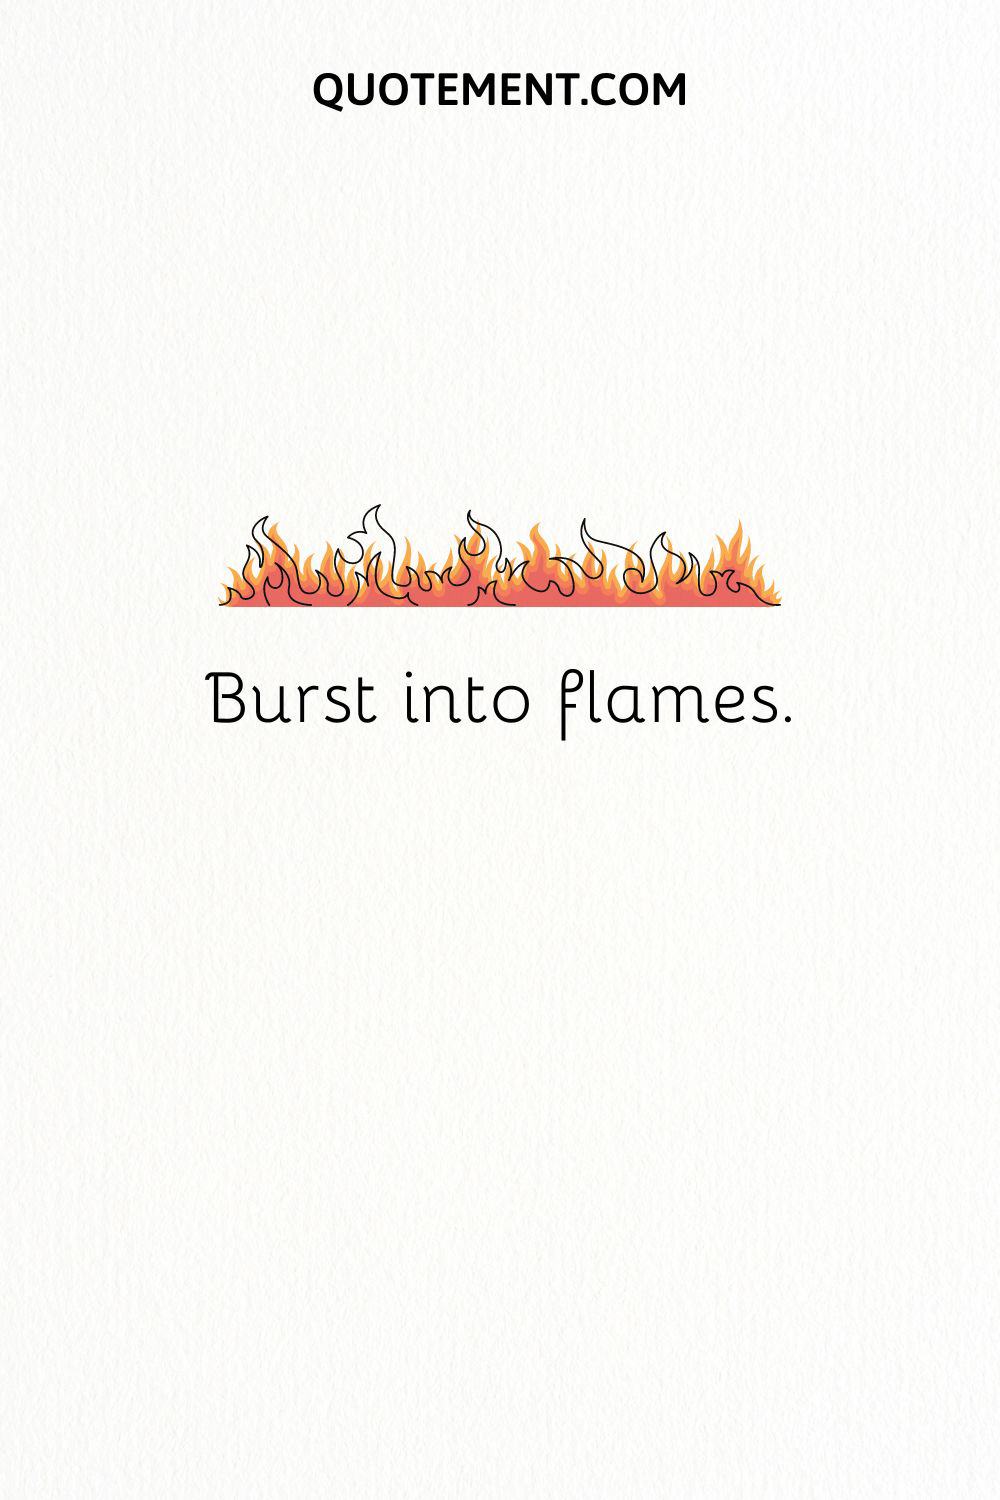 Burst into flames